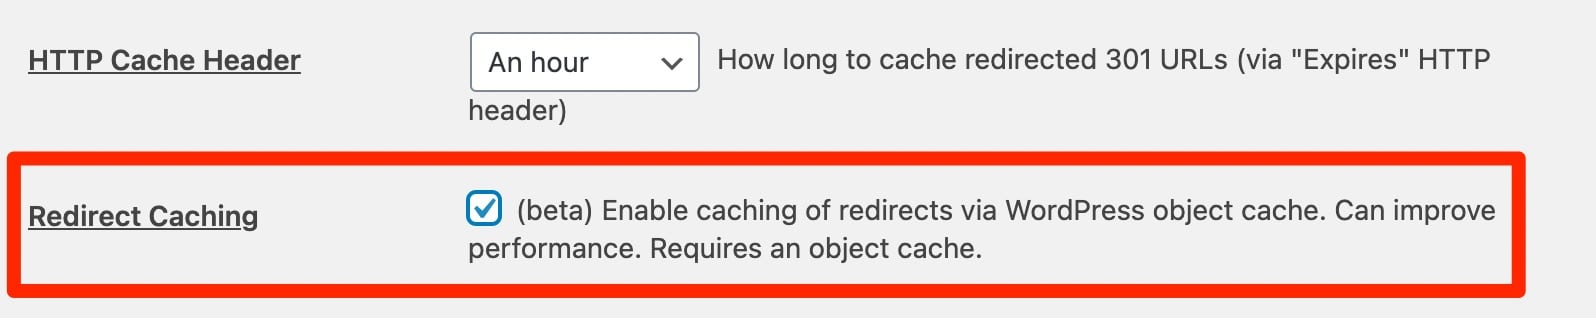 Redirect Caching in the WordPress Redirection plugin.